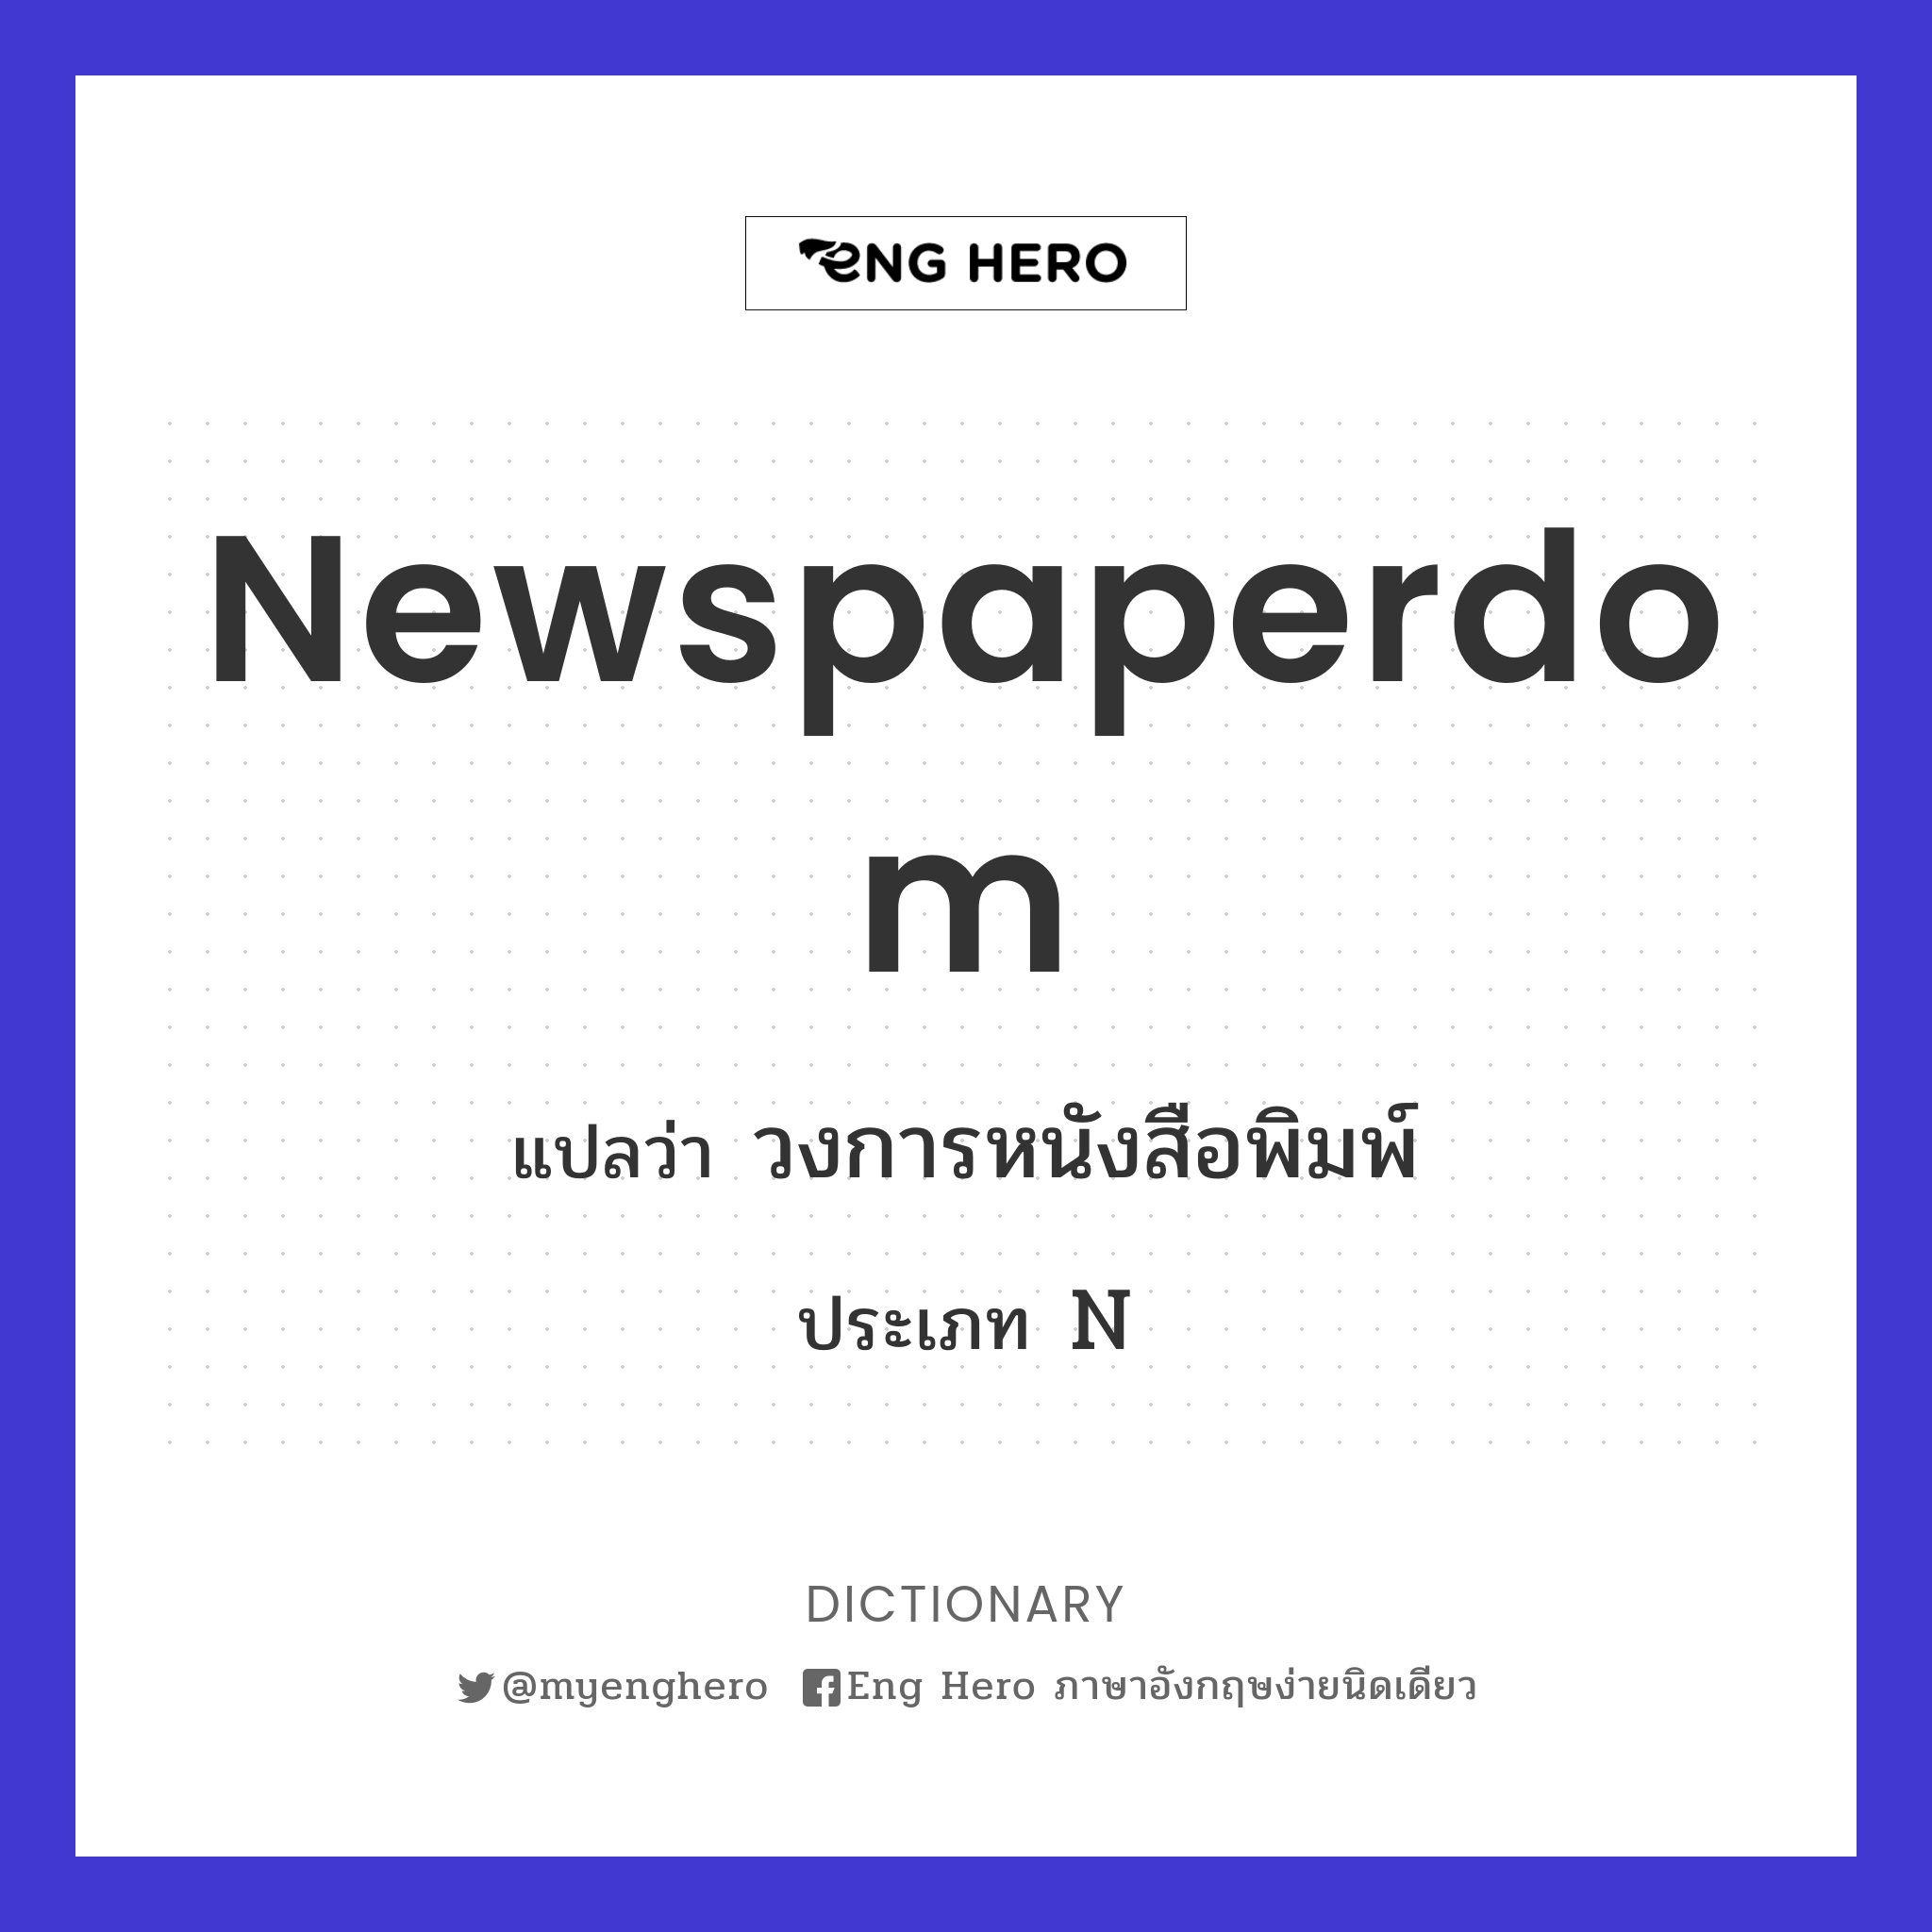 newspaperdom